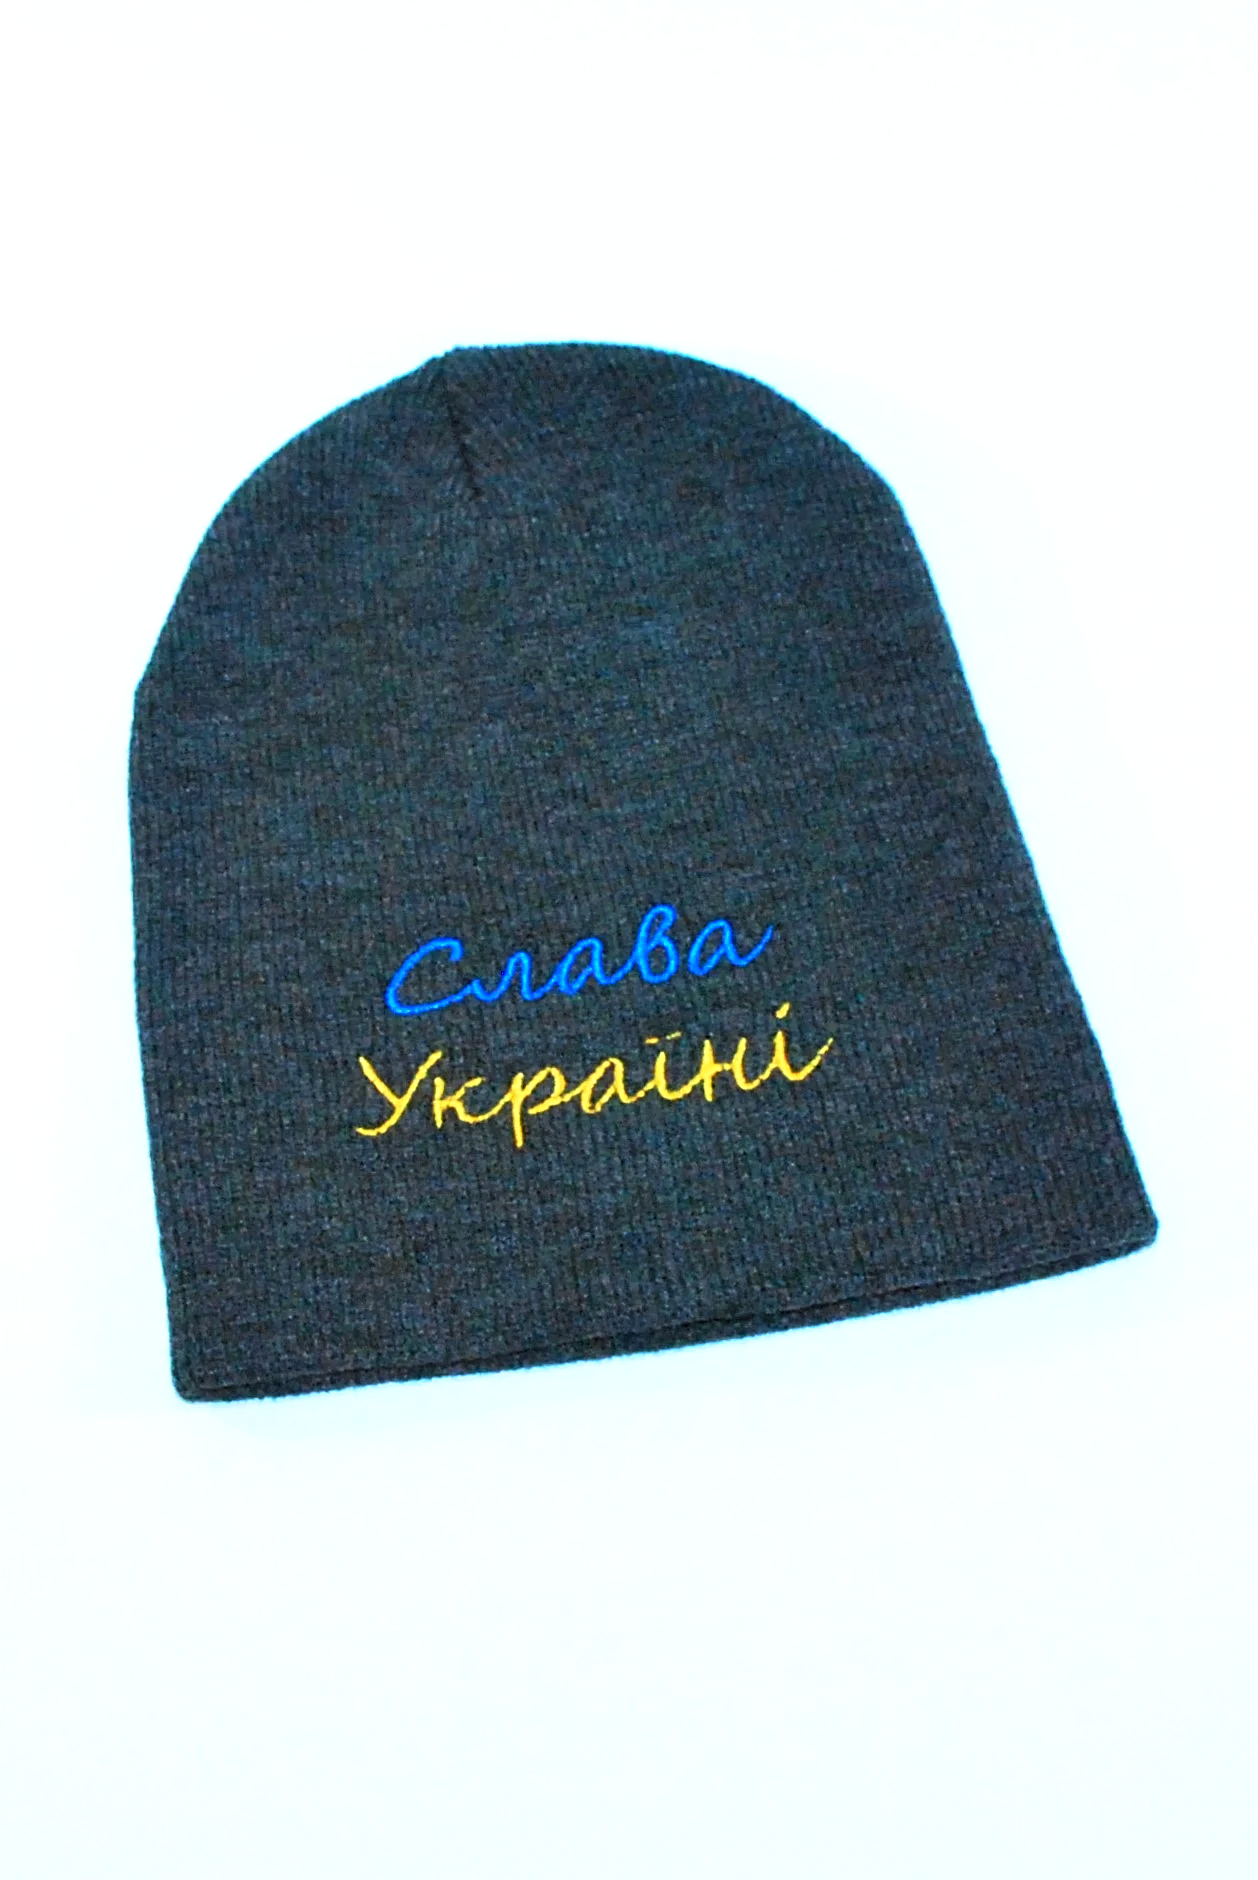 Knitted embroidered beanie hat "Слава Україні"